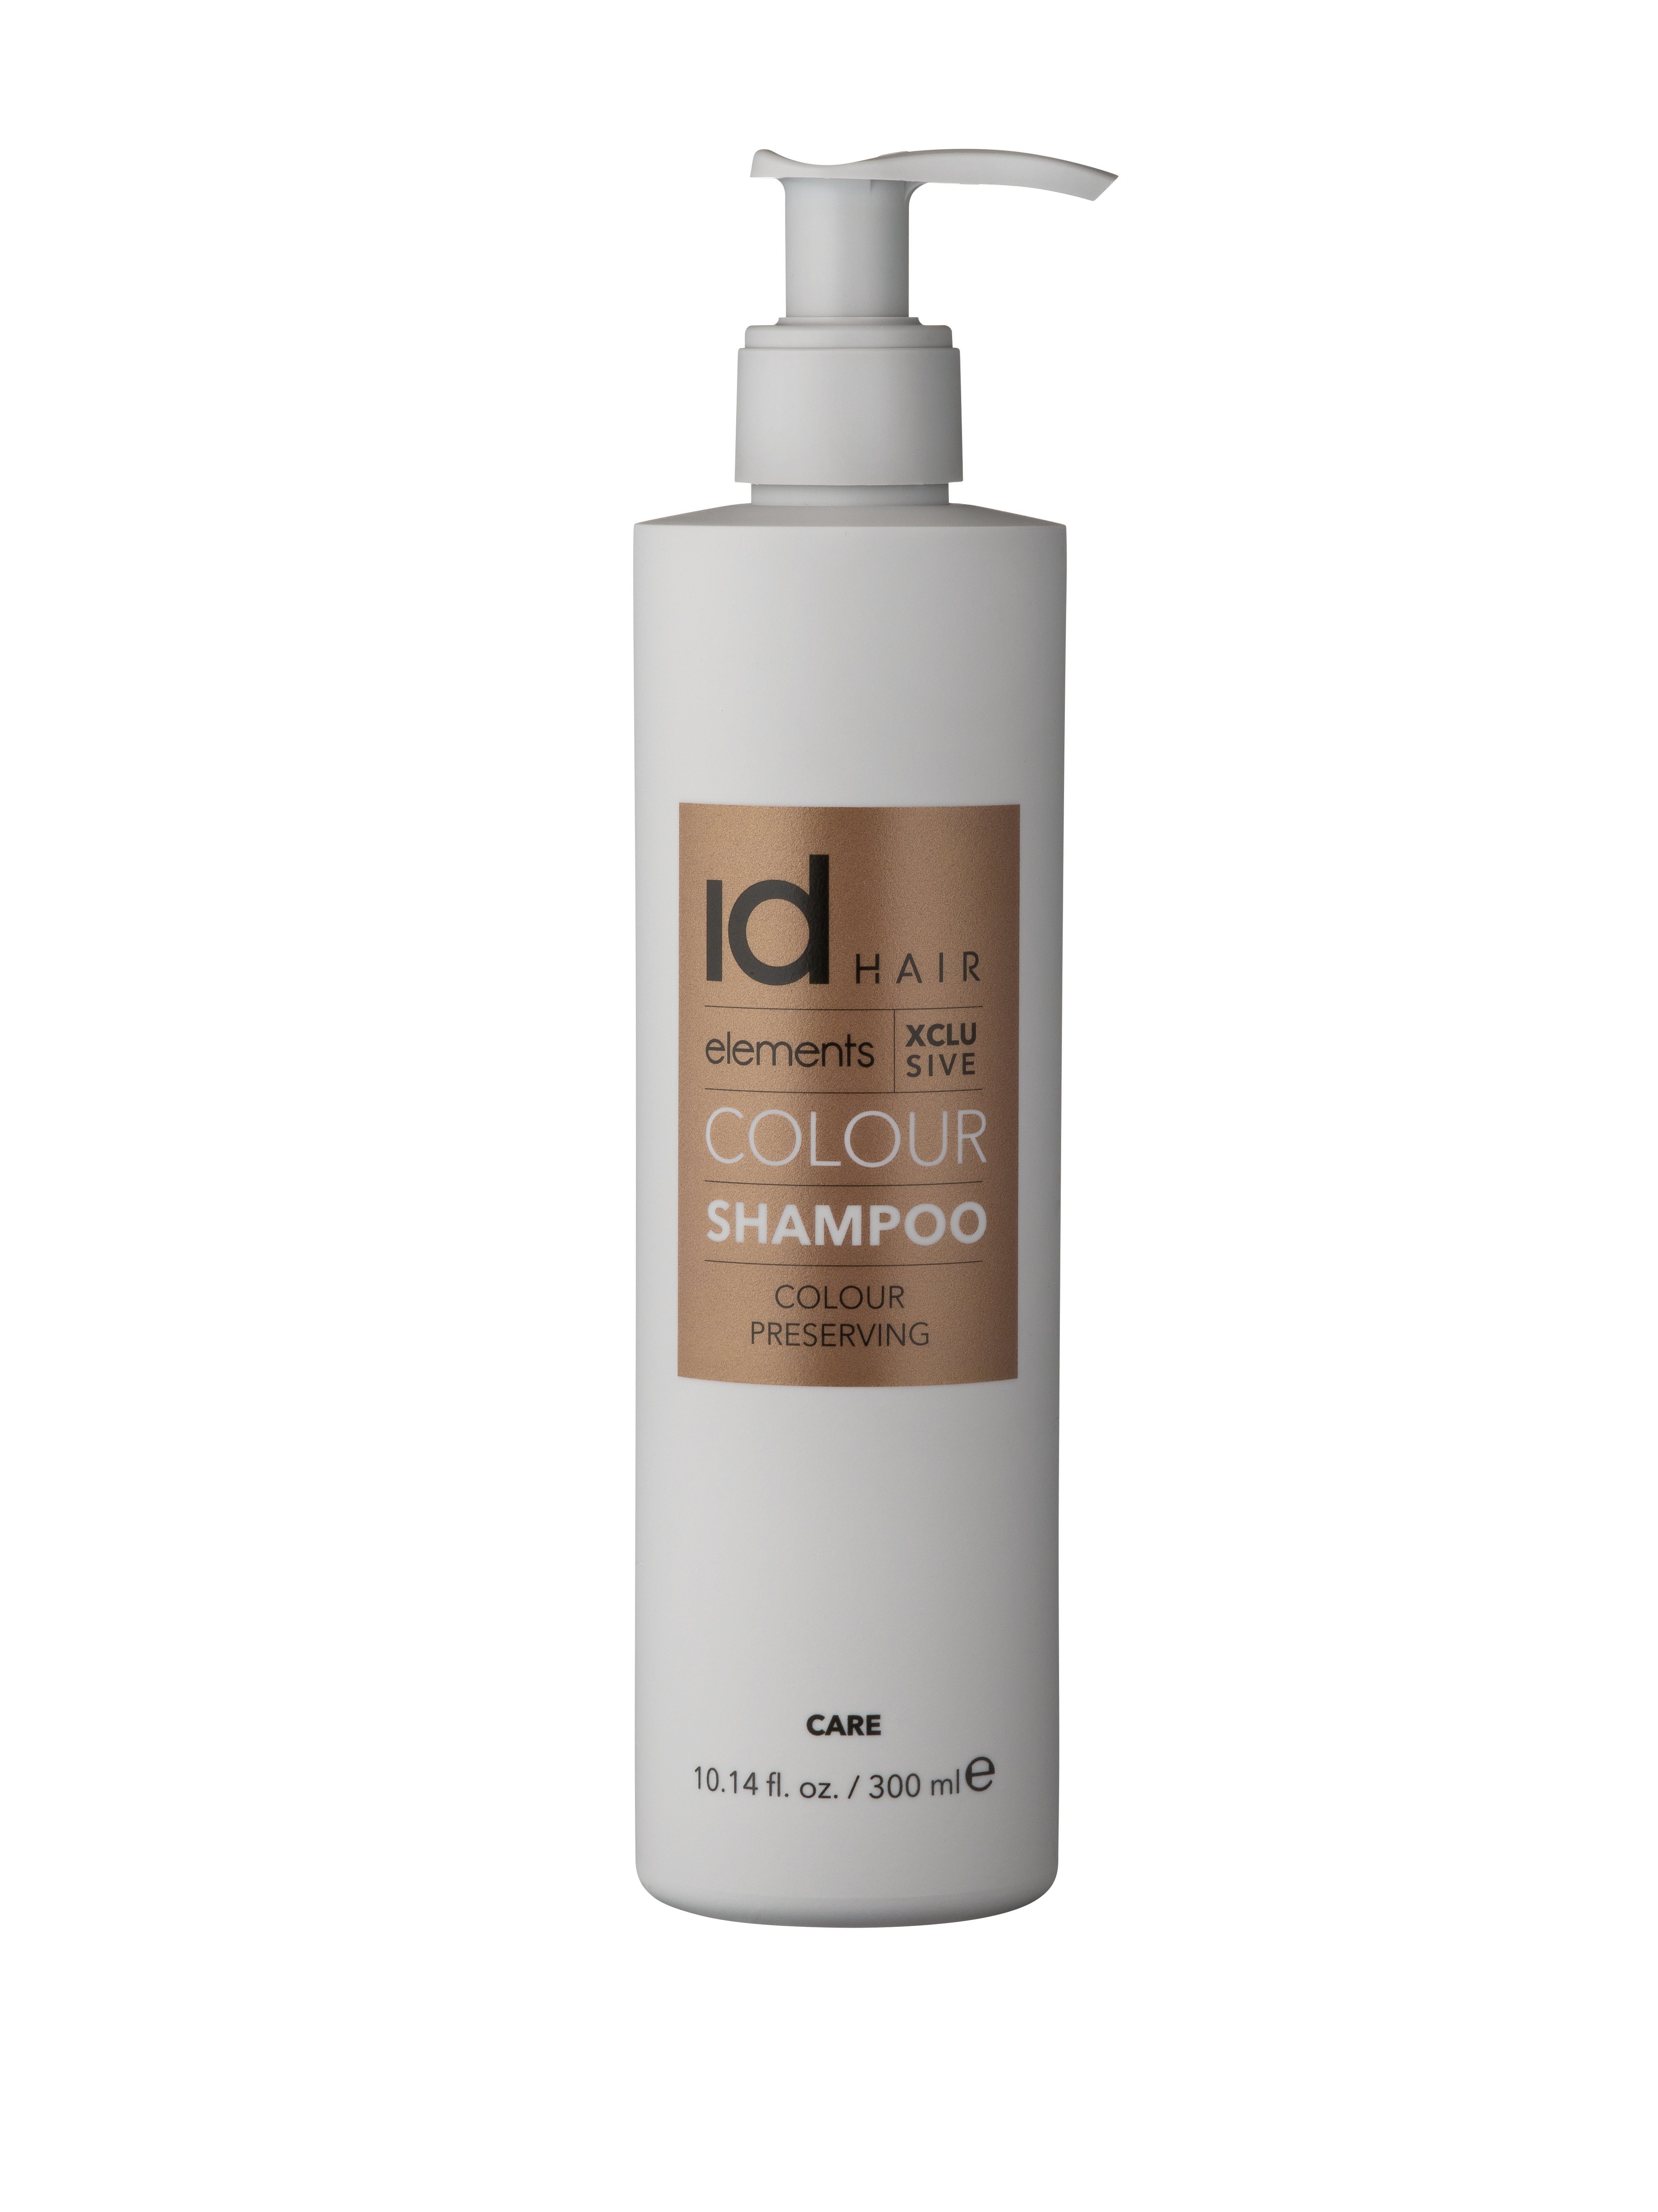 IdHAIR - Elements Xclusive Colour Shampoo 300 ml - Skjønnhet